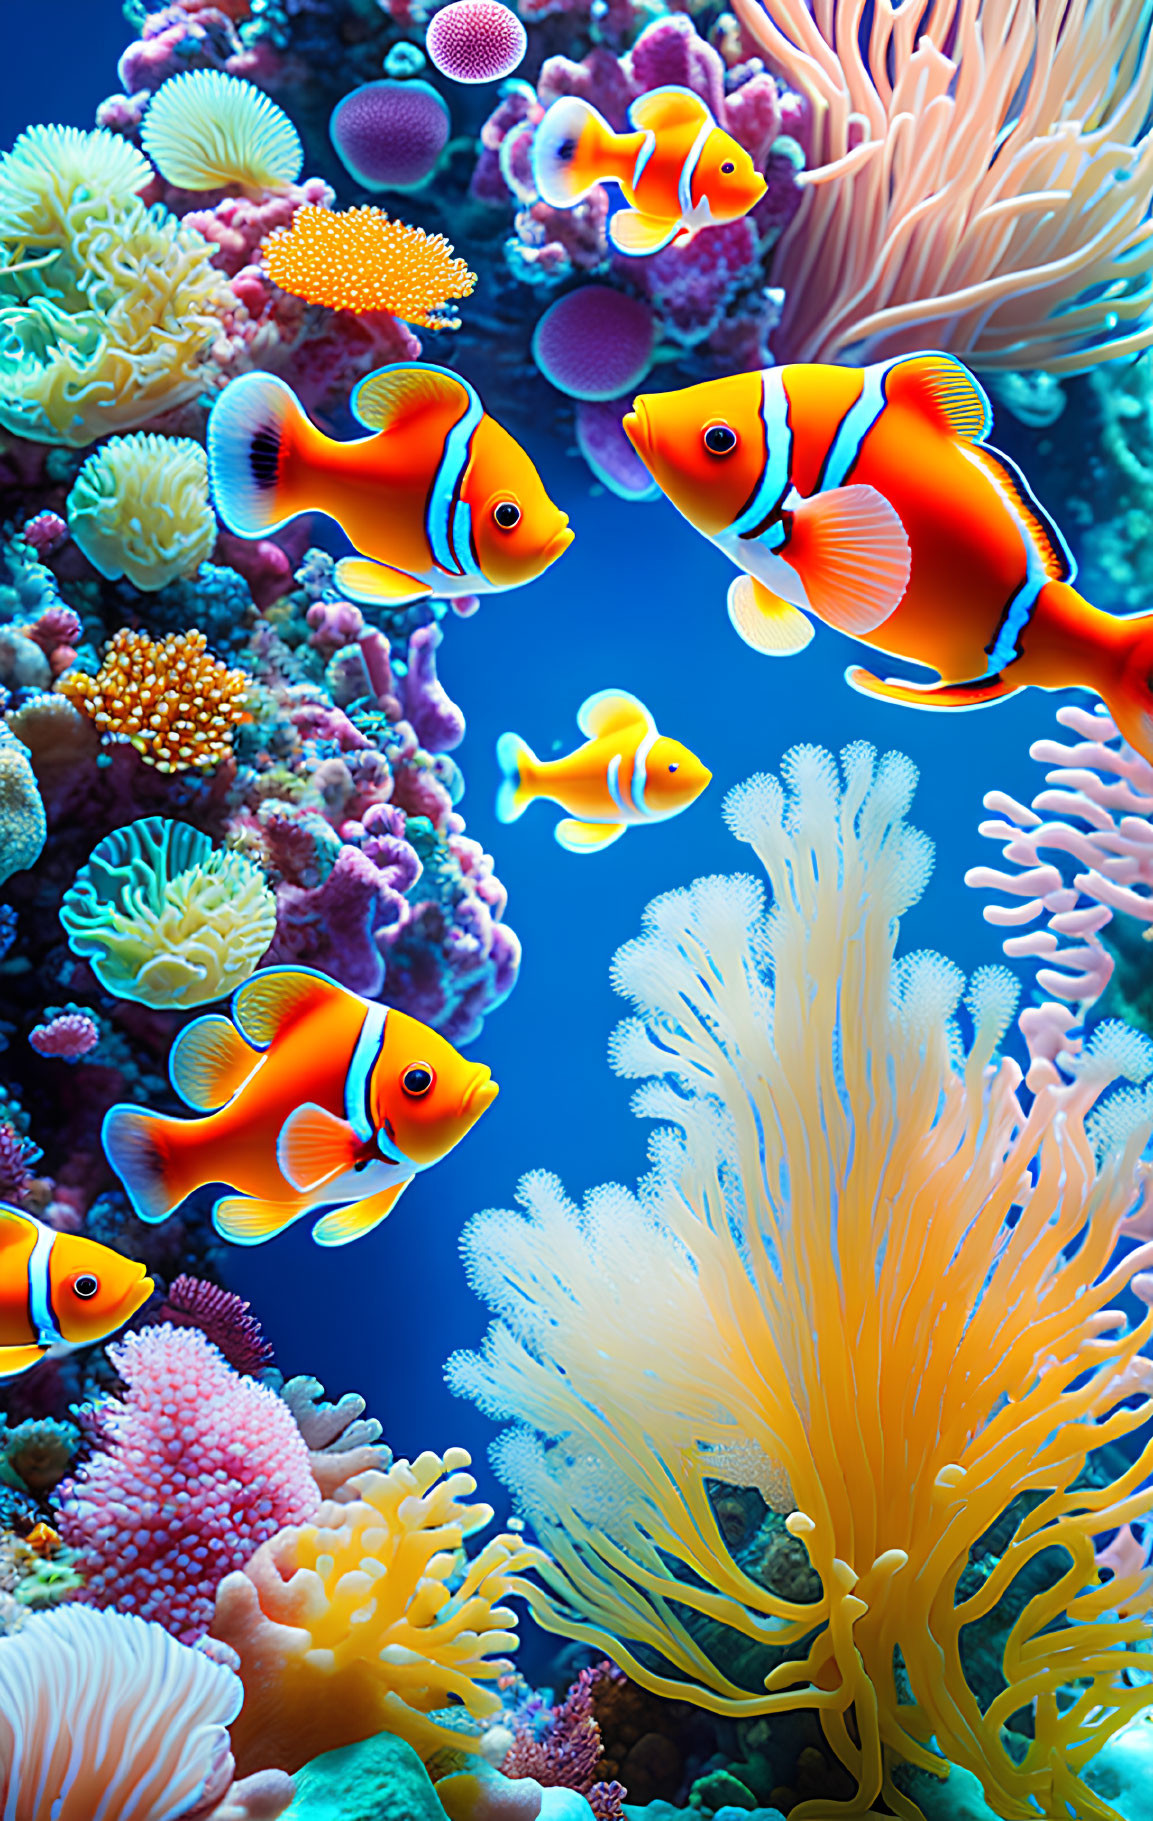 Colorful Clownfish in Vibrant Coral Reef Scene